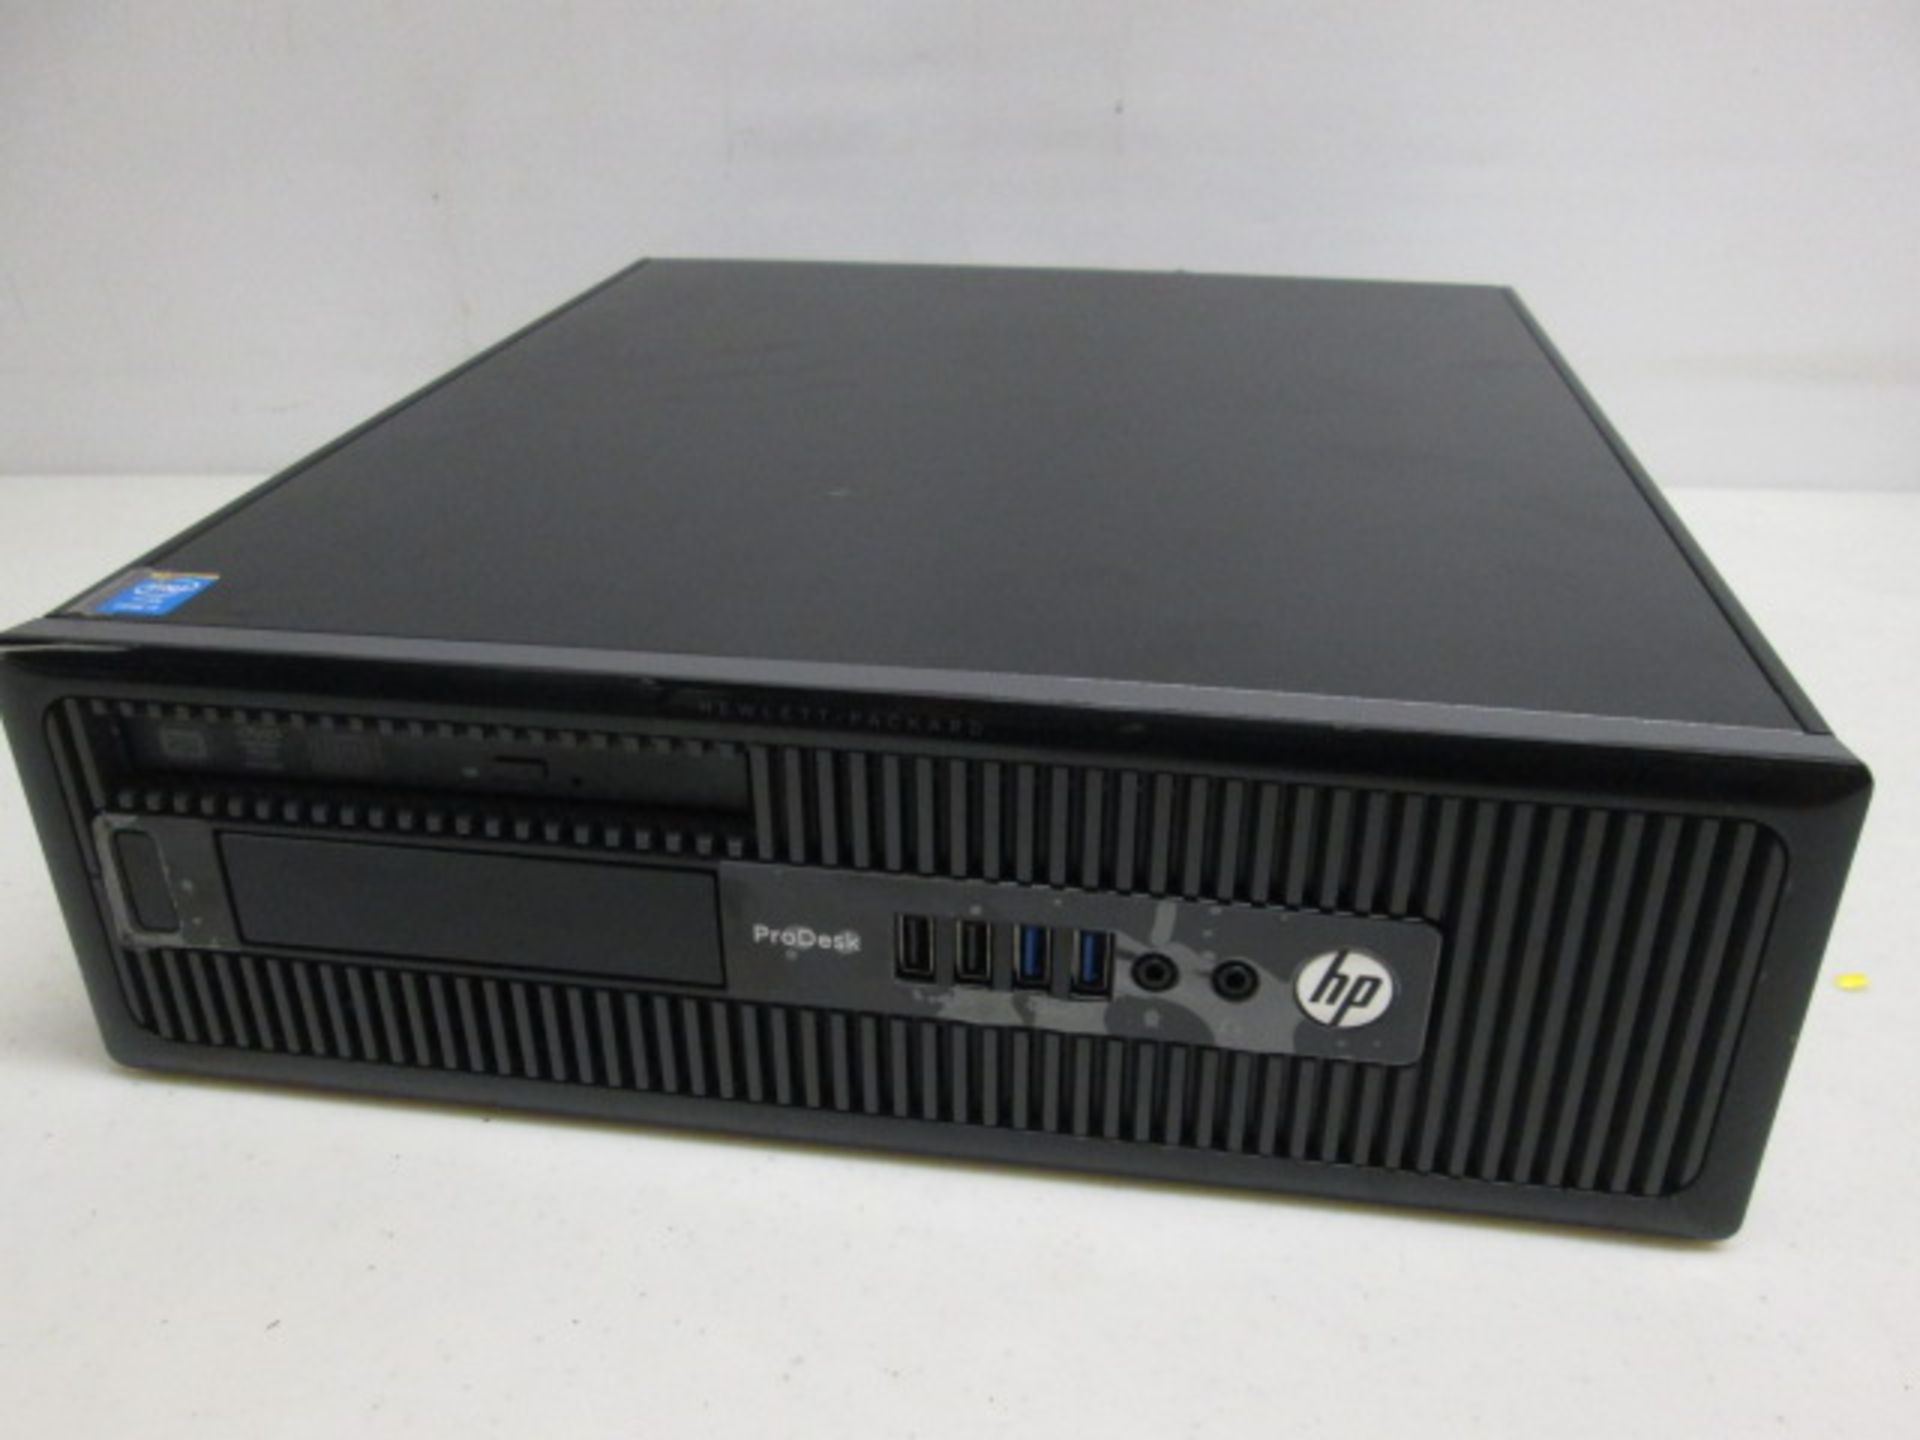 HP Pro Desk 400 G1 SFF. Running Windows 7 Professional, Intel Core i5-4570, CPU@3.2Ghz, 12GB RAM,